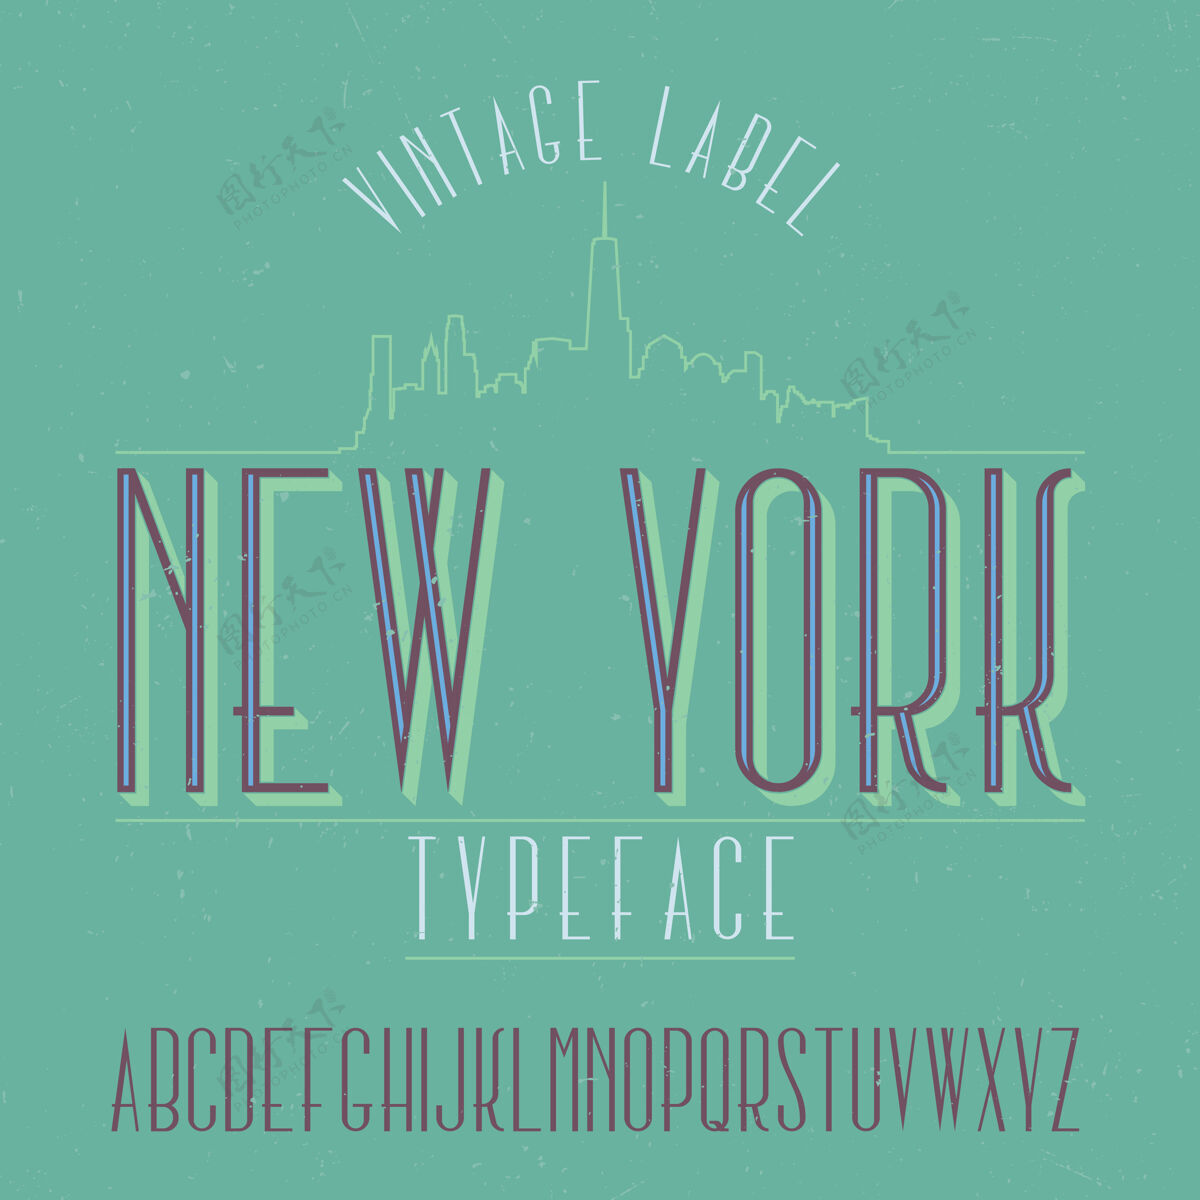 Writing复古标签字体命名为纽约YorkTypeMark